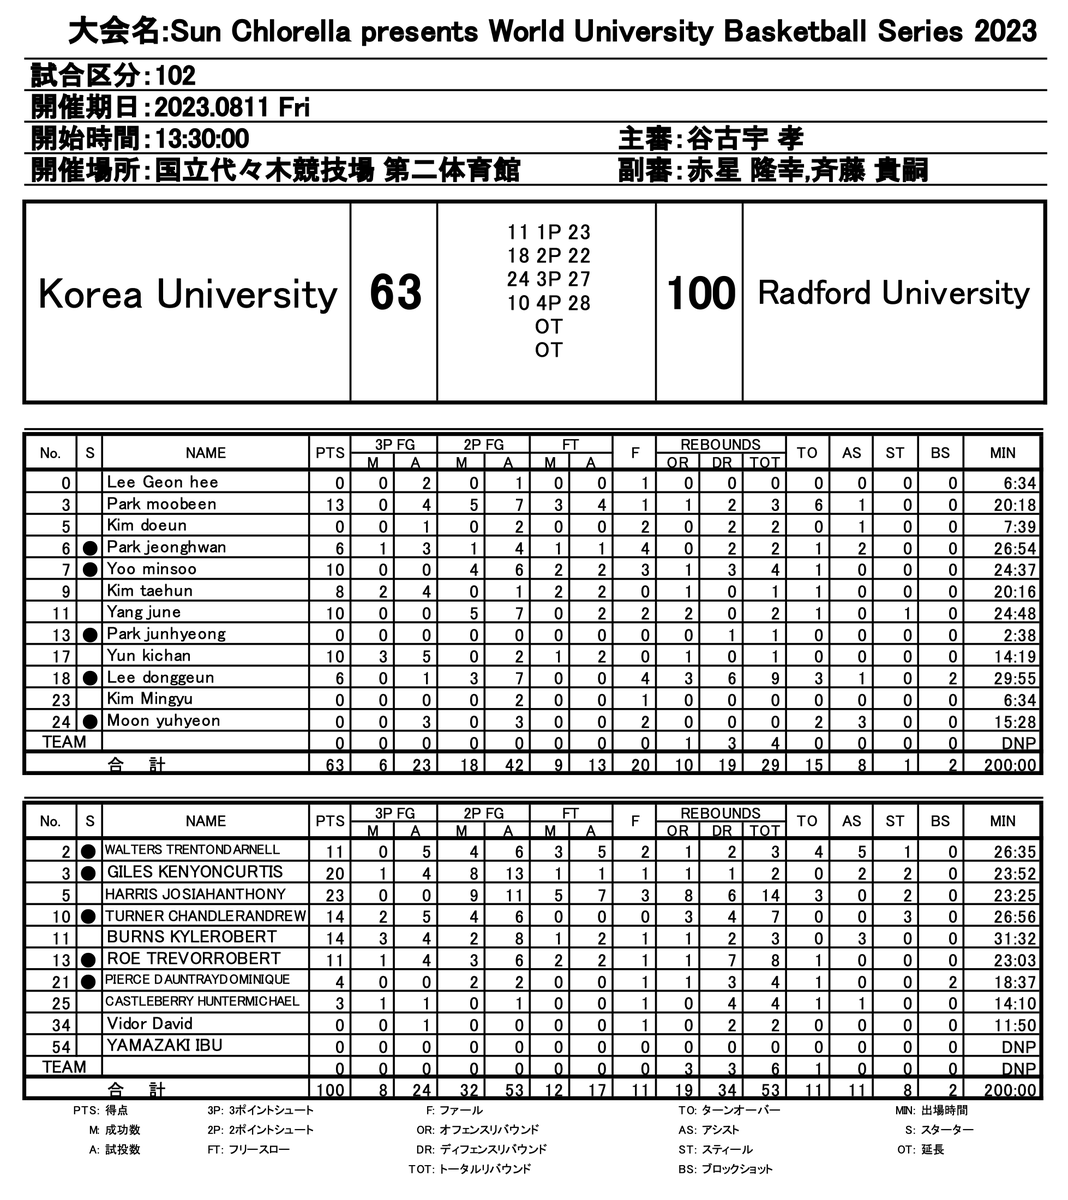 Full replay of last night's game vs. Korea University ➡️ youtube.com/live/-n-Jh3gwE… (starts at 2:15:15) Official Box Score ⤵️